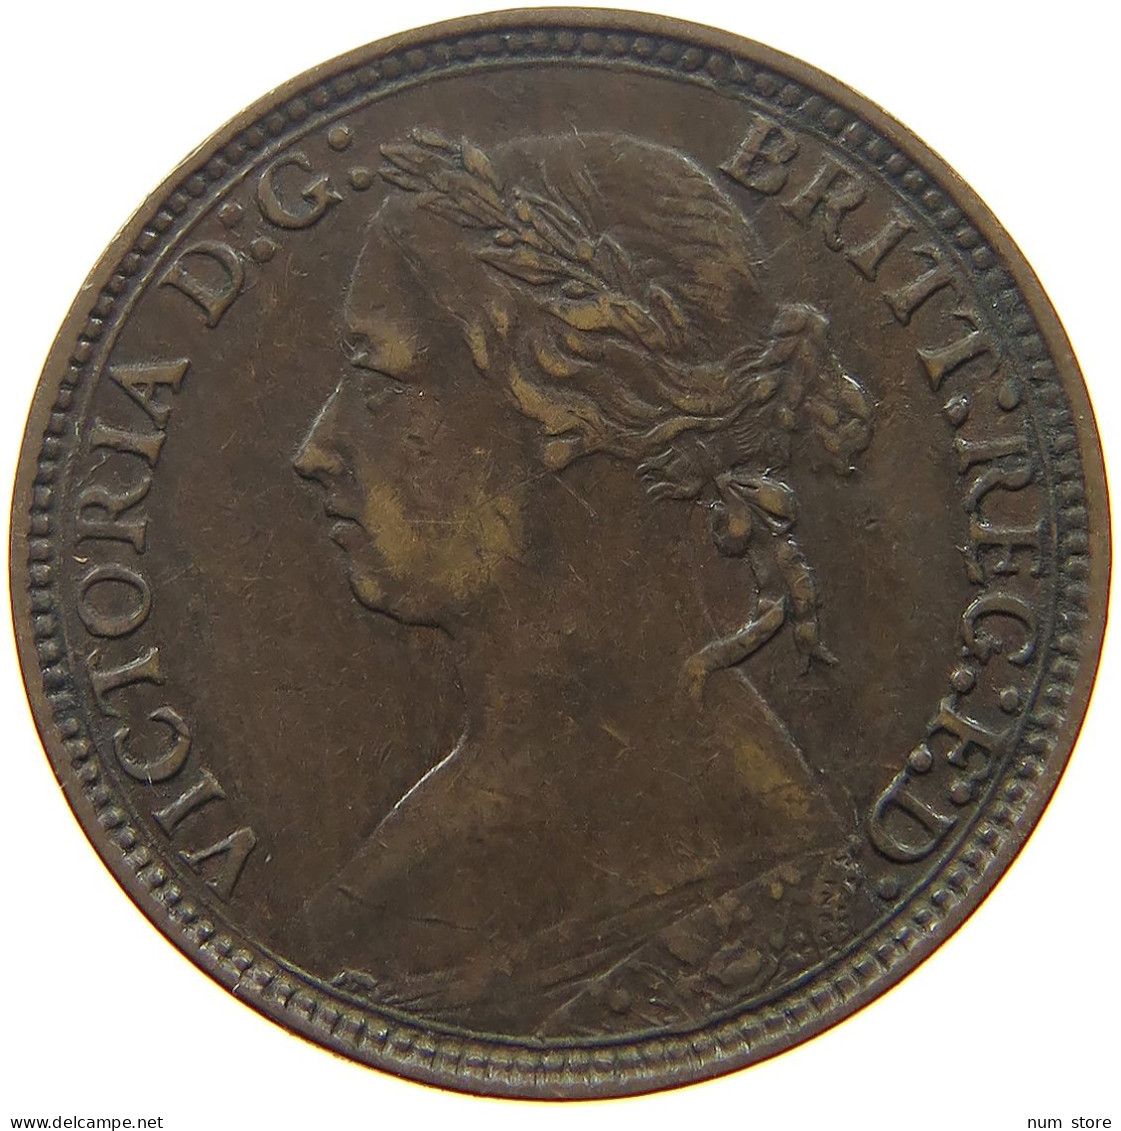 GREAT BRITAIN FARTHING 1875 H Victoria 1837-1901 #s052 0049 - B. 1 Farthing